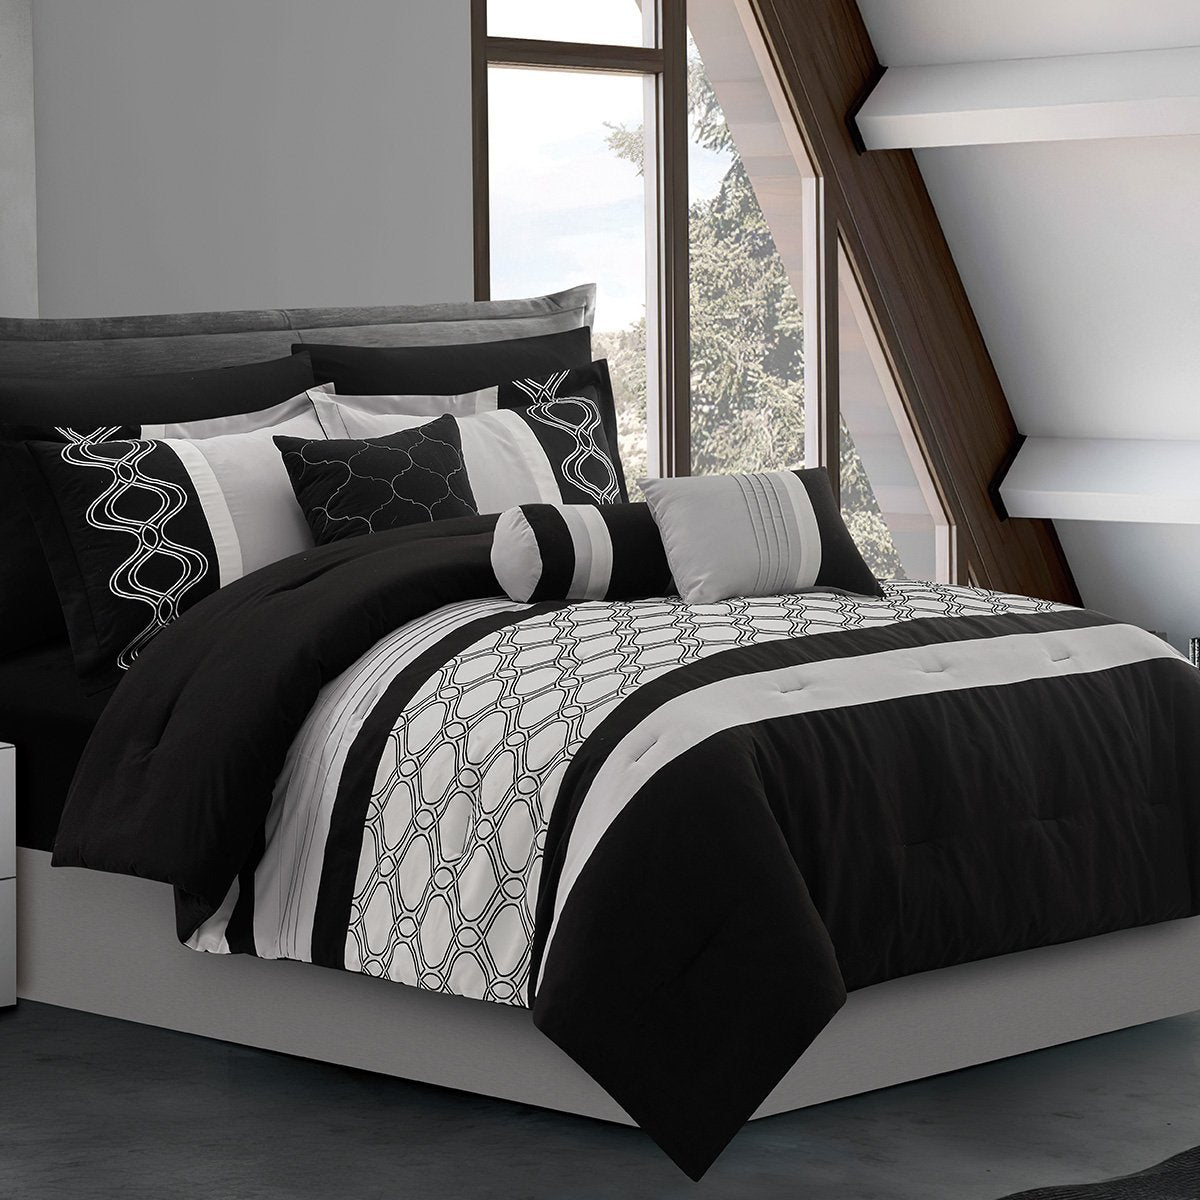 Black & White Luxury Comforter Set Bed in A Bag – 9 Piece Bed Sets